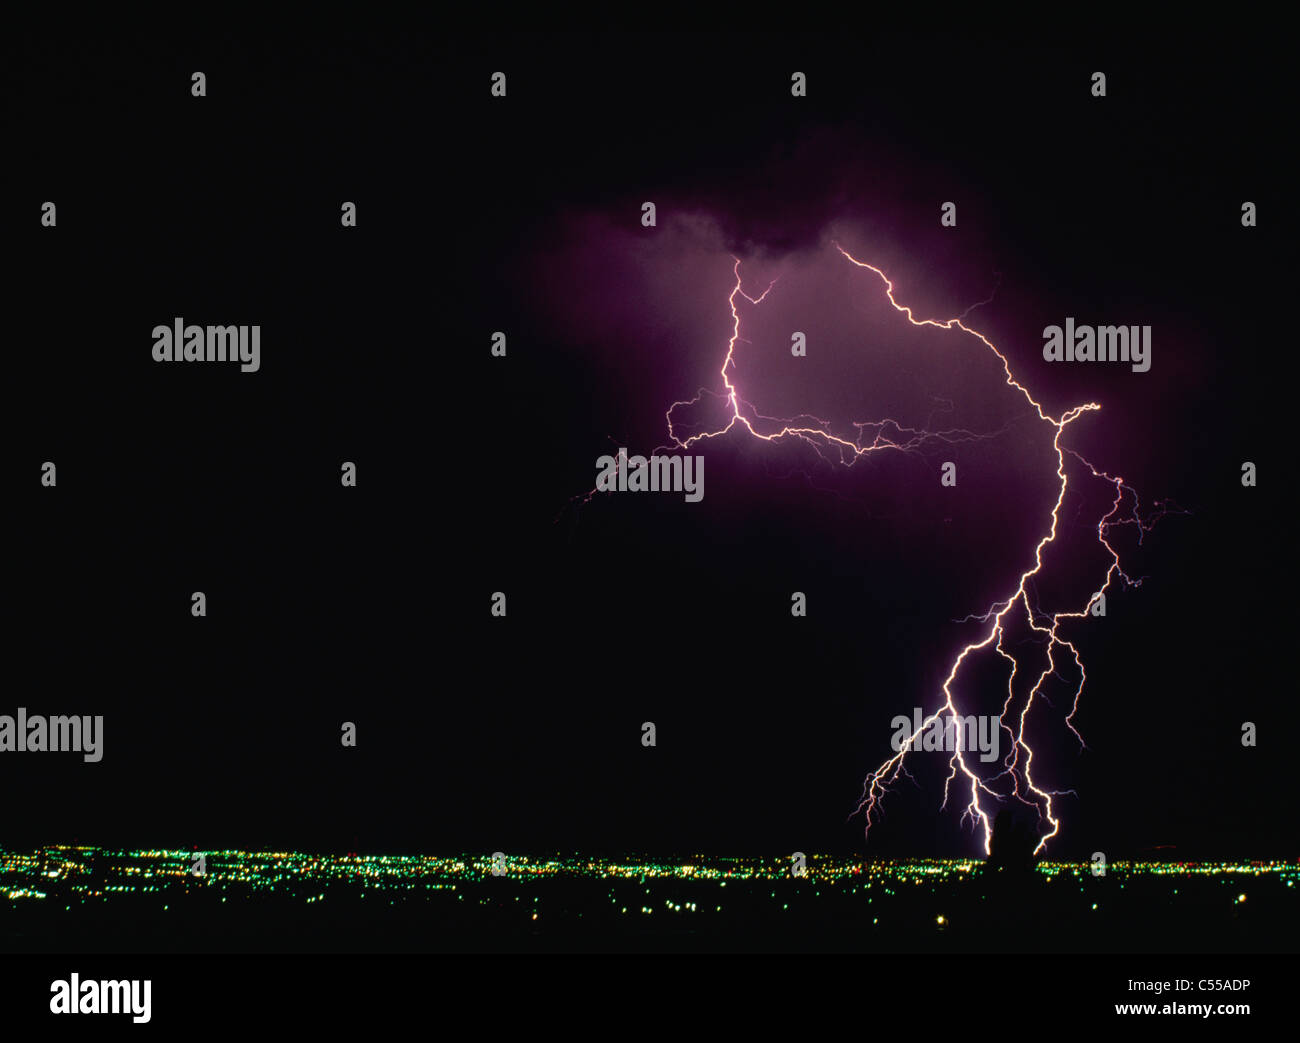 Lightning over a city Stock Photo